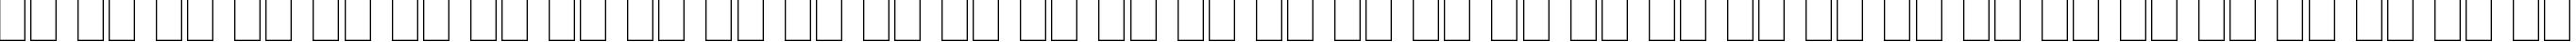 Пример написания русского алфавита шрифтом Lincoln Plain:001.003